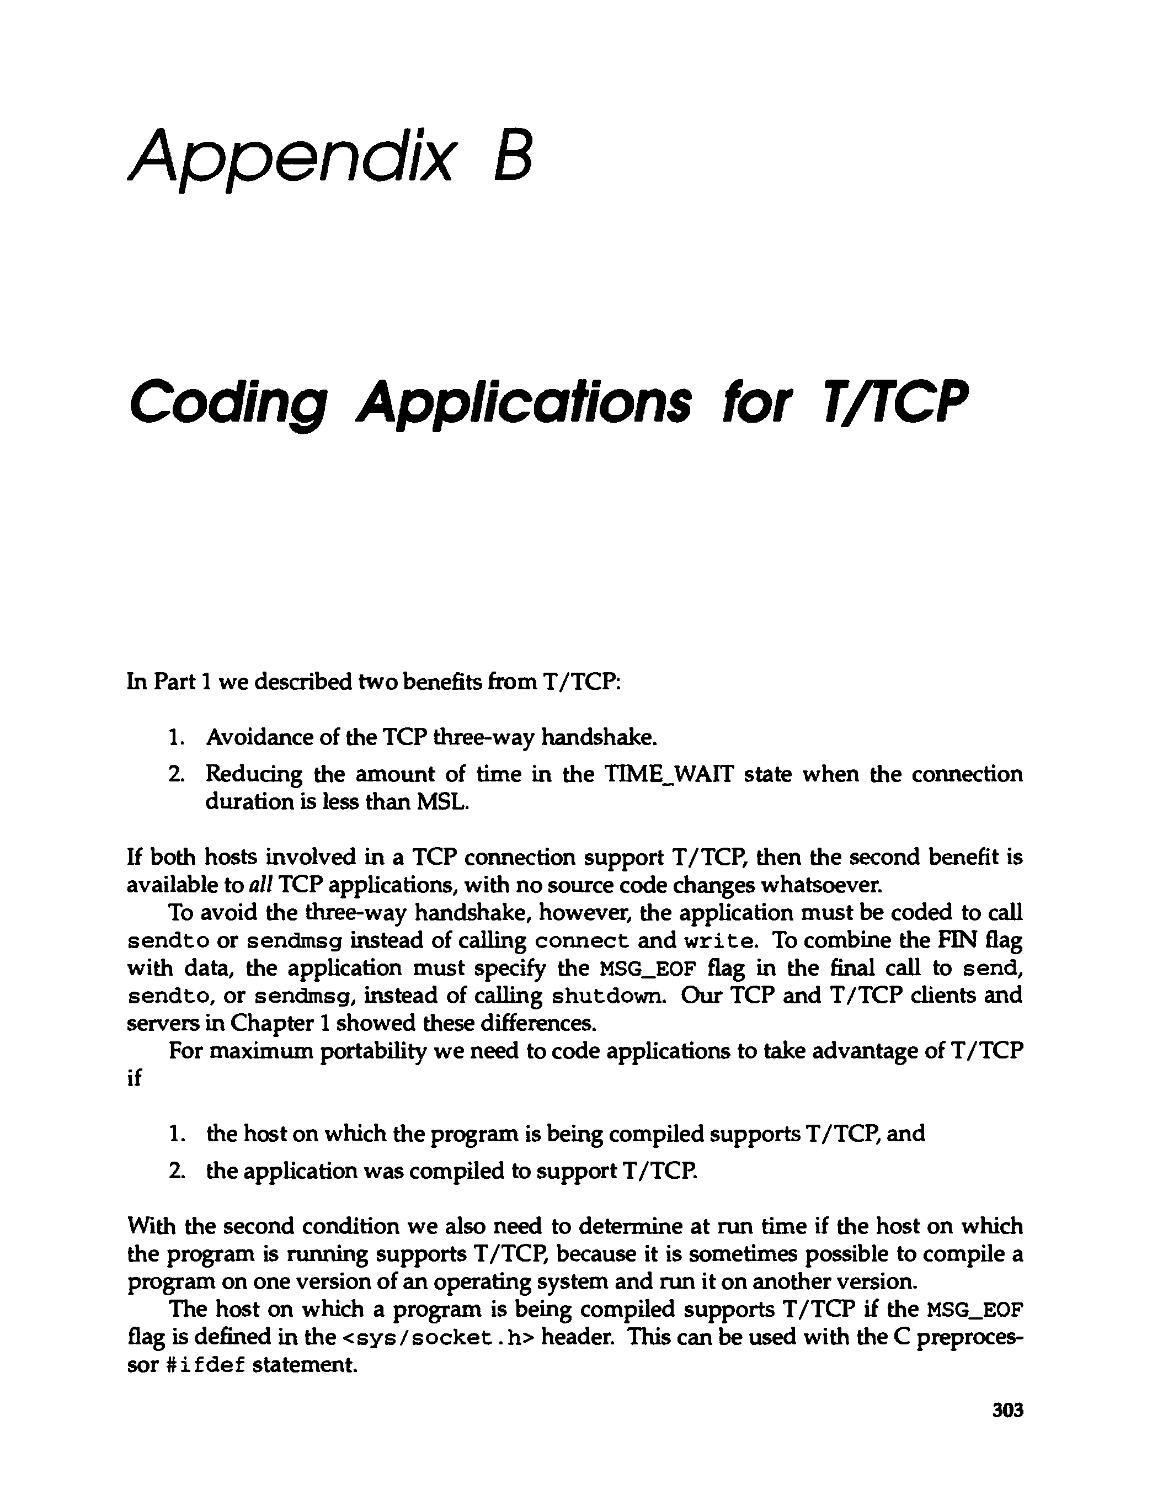 Appendix B. Coding Applications for T/TCP